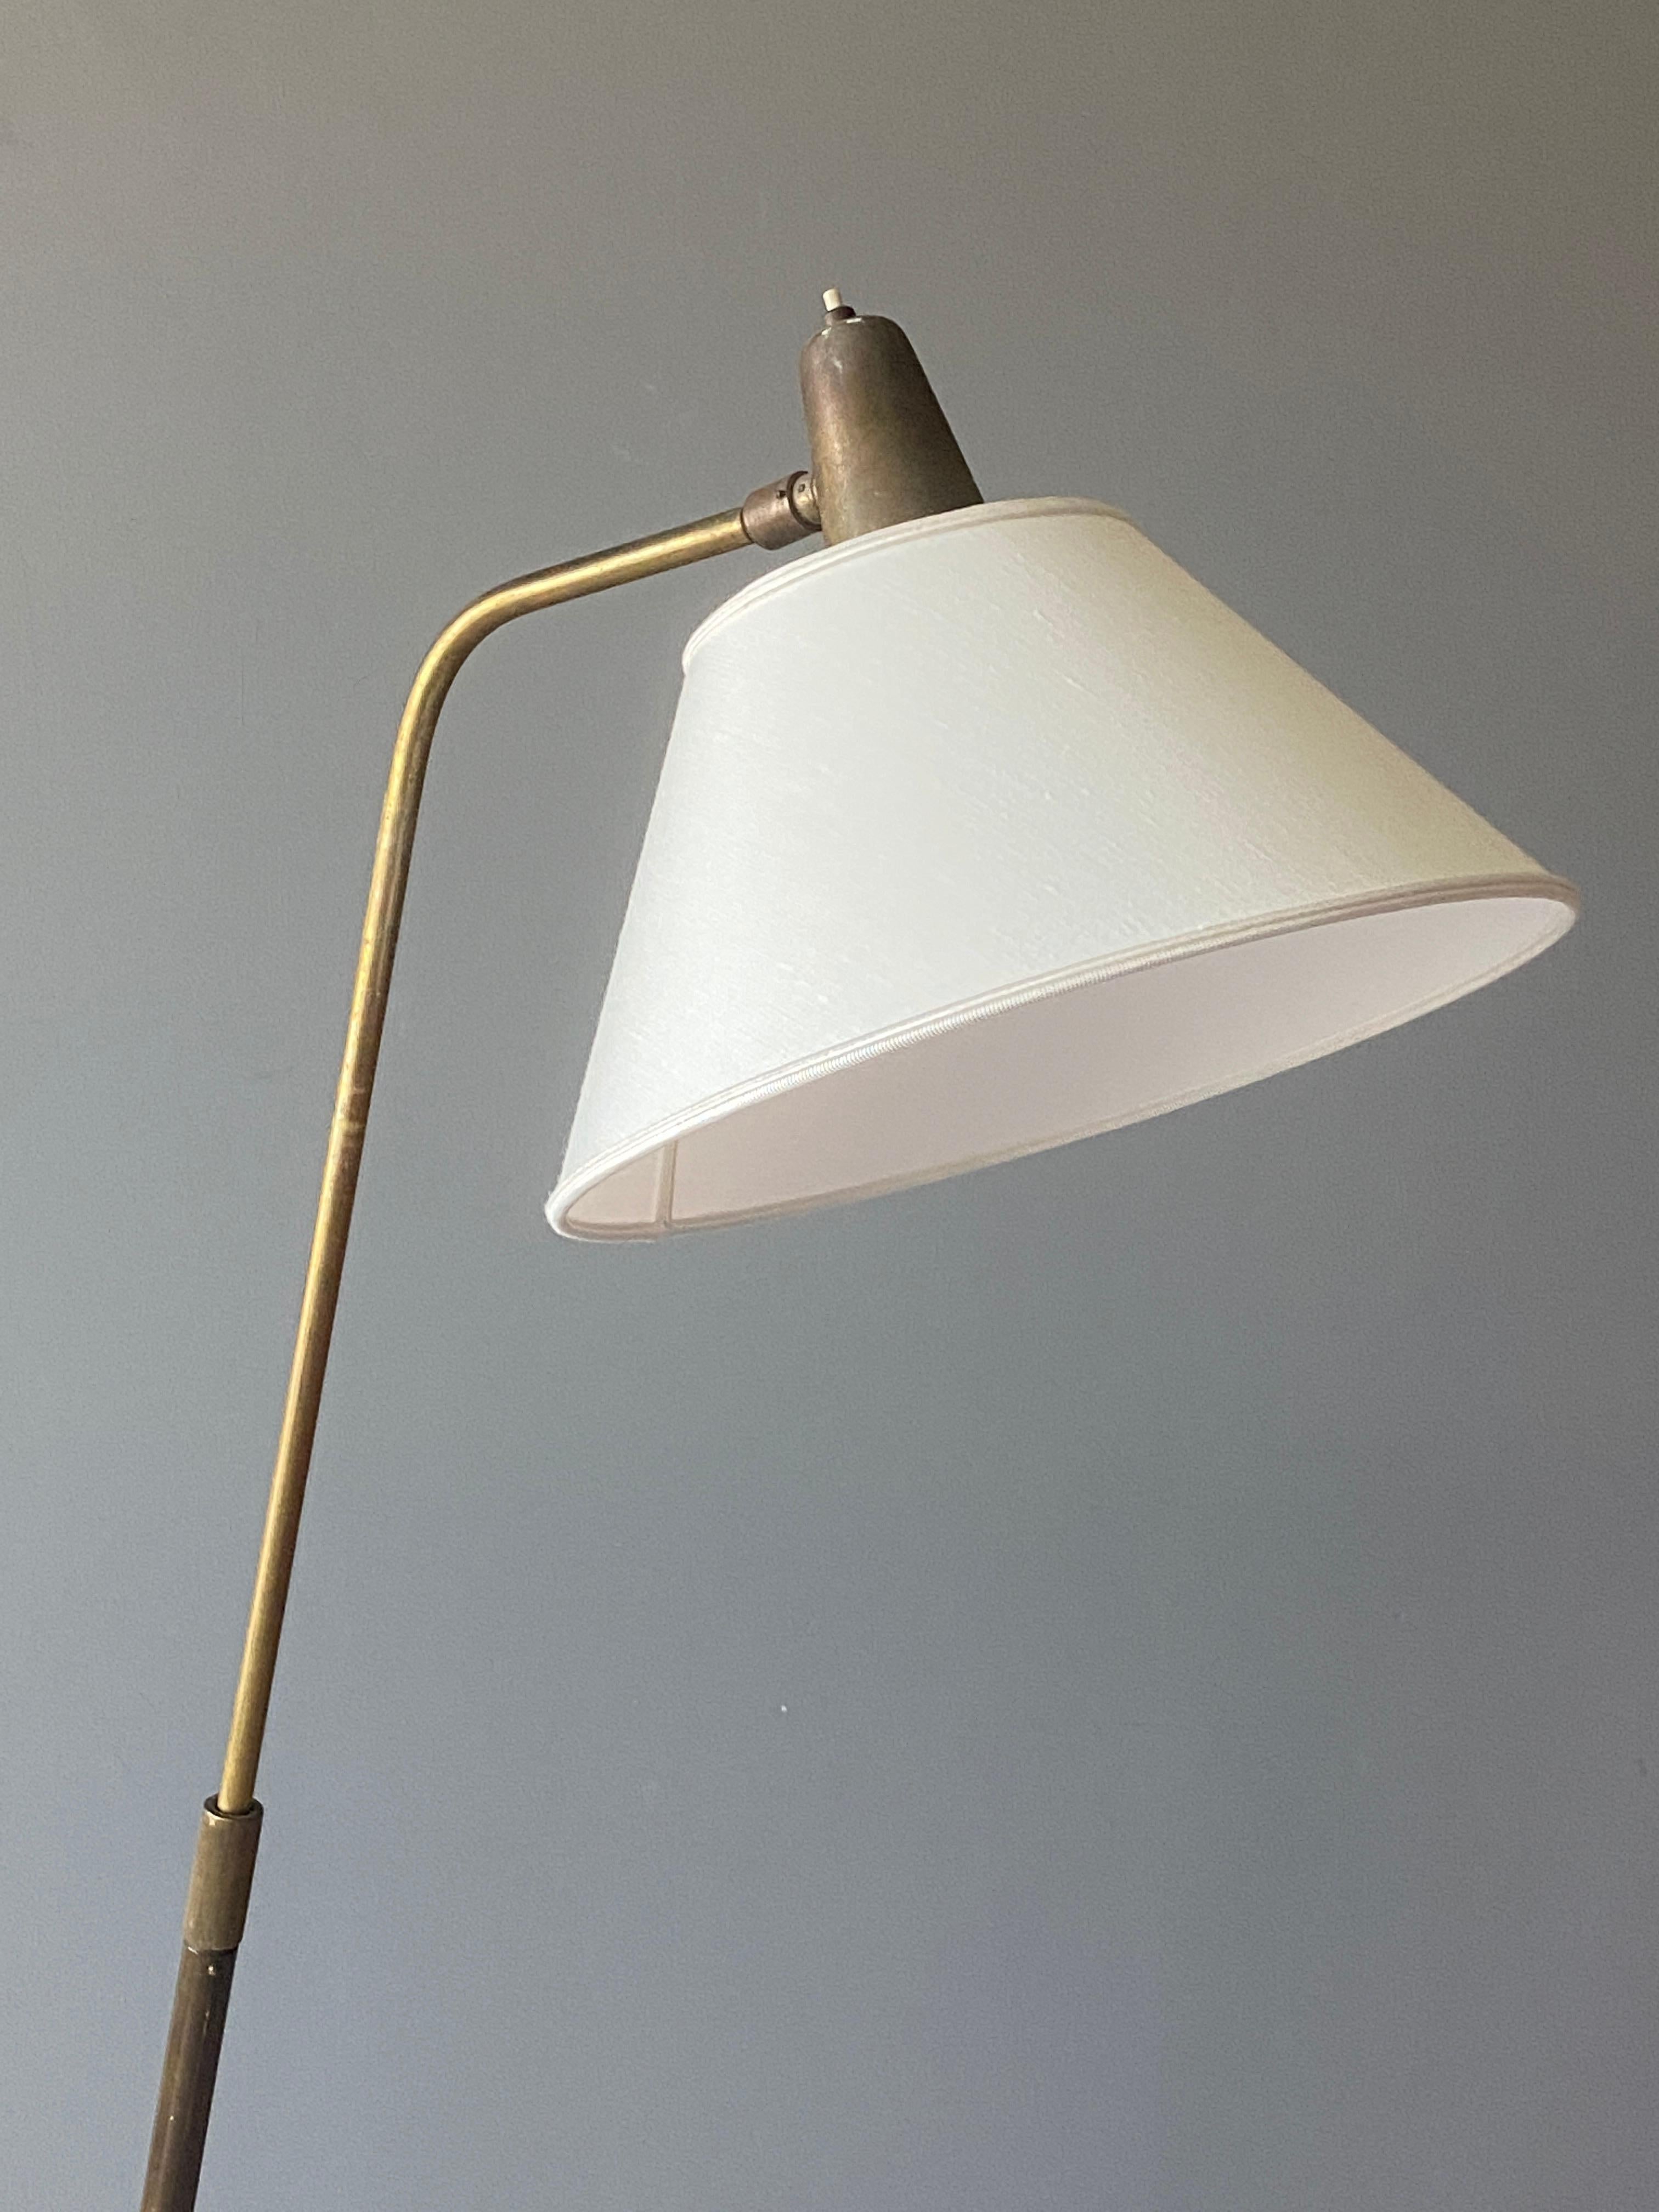 Giuseppe Ostuni Seltene verstellbare Stehlampe, Messing, Stoff, O-Luce, Italien, 1960er Jahre (Moderne der Mitte des Jahrhunderts) im Angebot